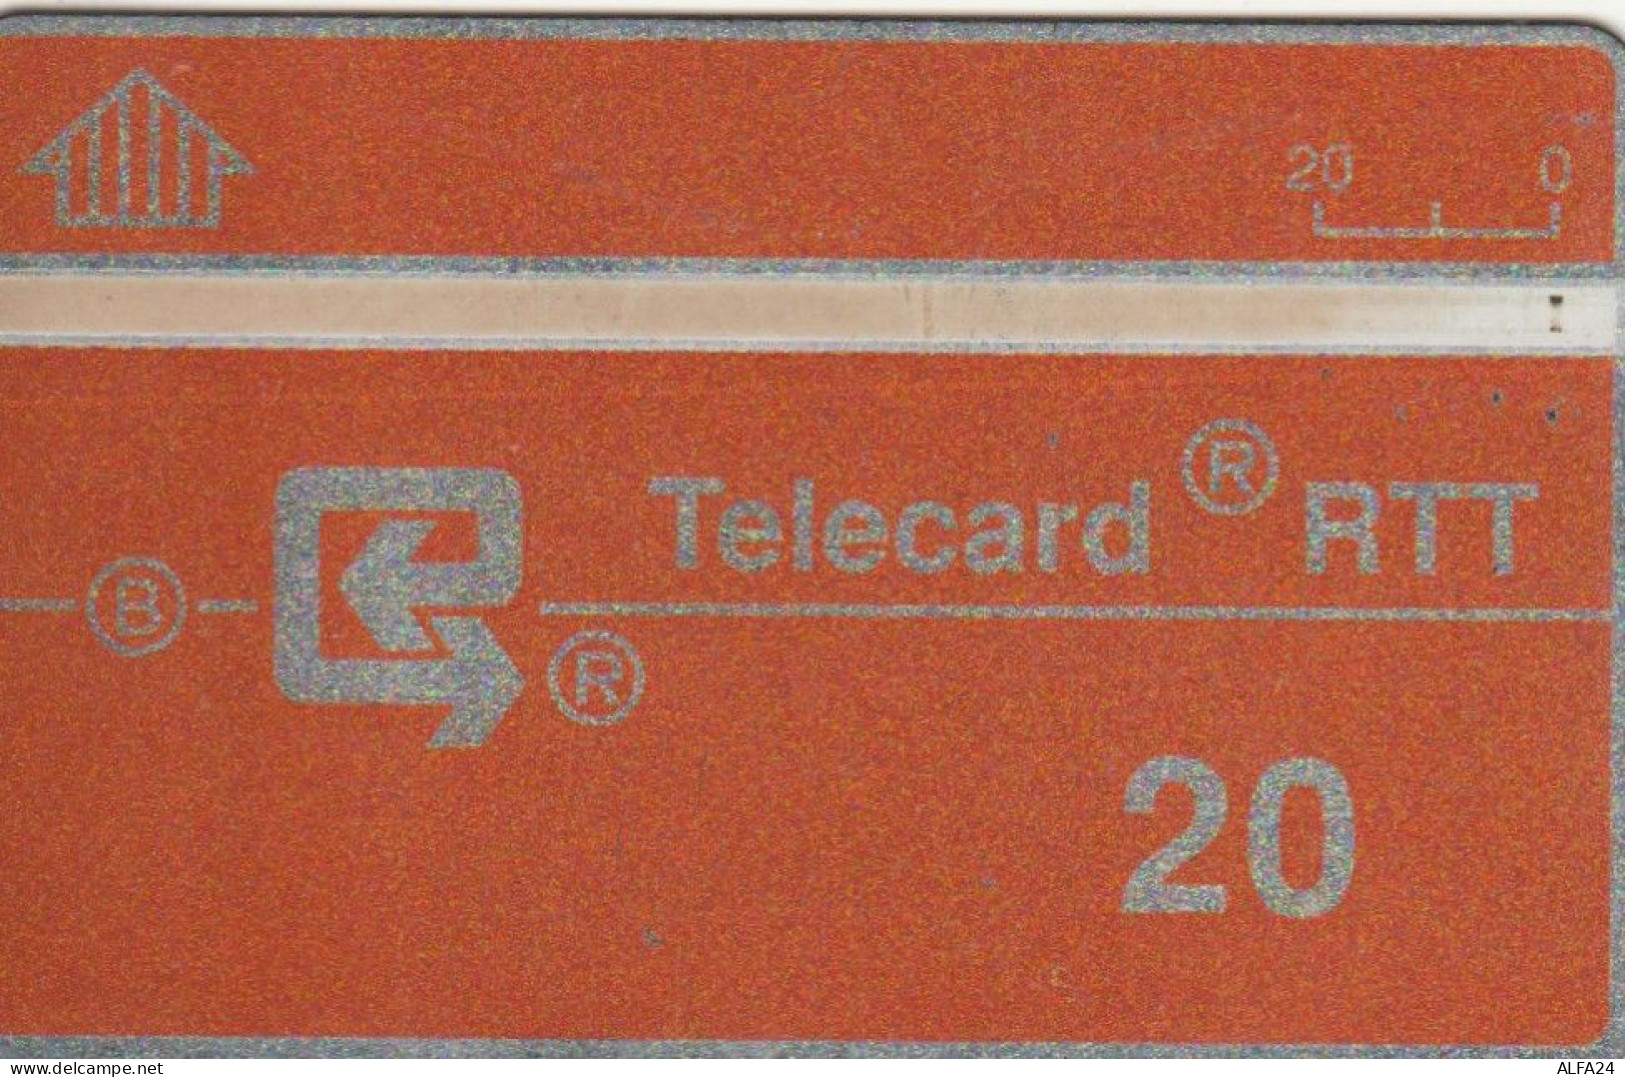 PHONE CARD BELGIO LG PRIME EMISSIONI (E104.26.1 - Senza Chip